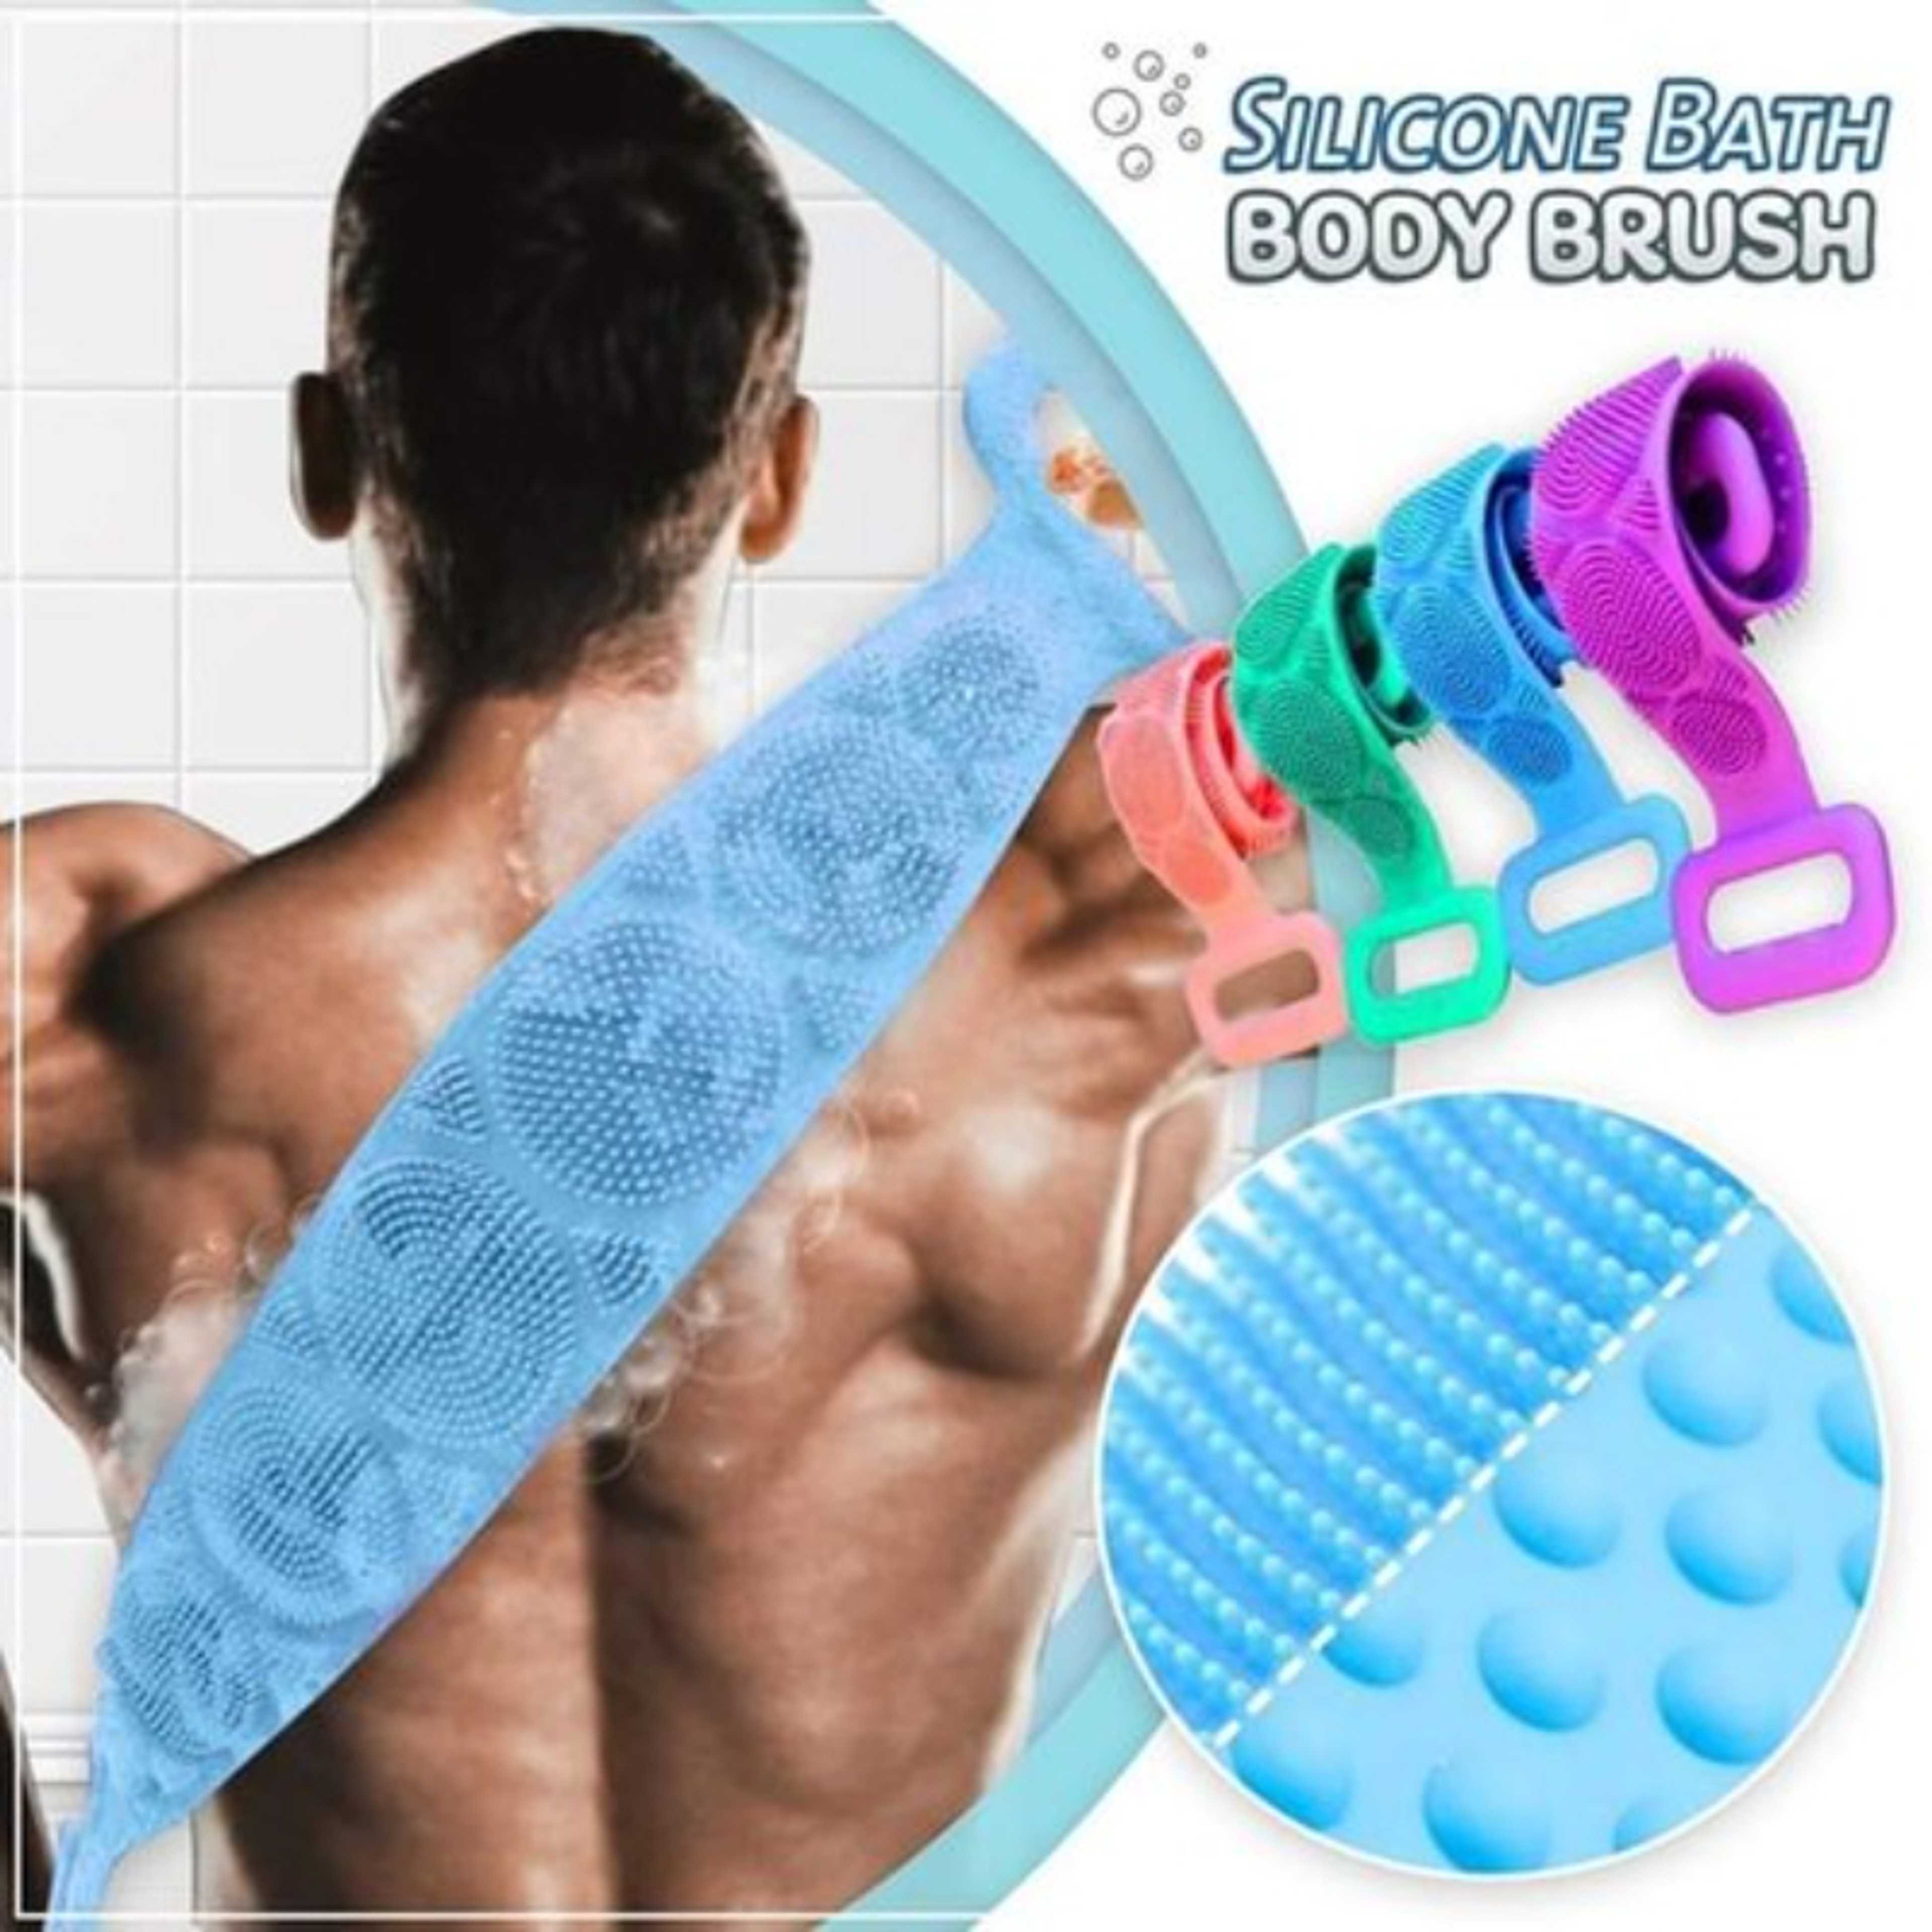 Silicone Bath Body Brush Scrubber Soft Rubbing Exfoliating Massage For Shower Cleaning Bathroom Strap